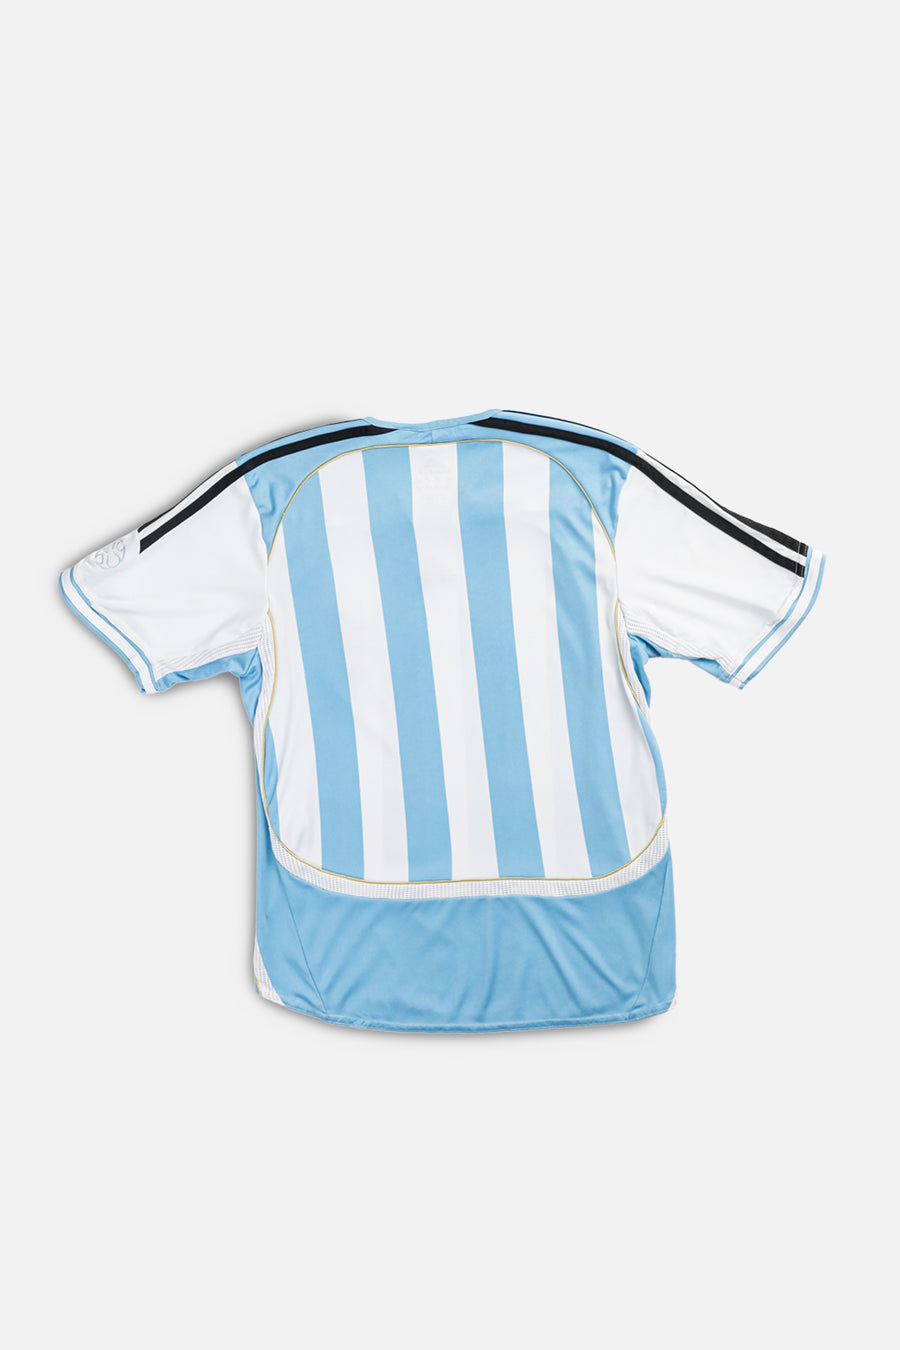 Adidas Argentina Soccer Jersey - Women's S